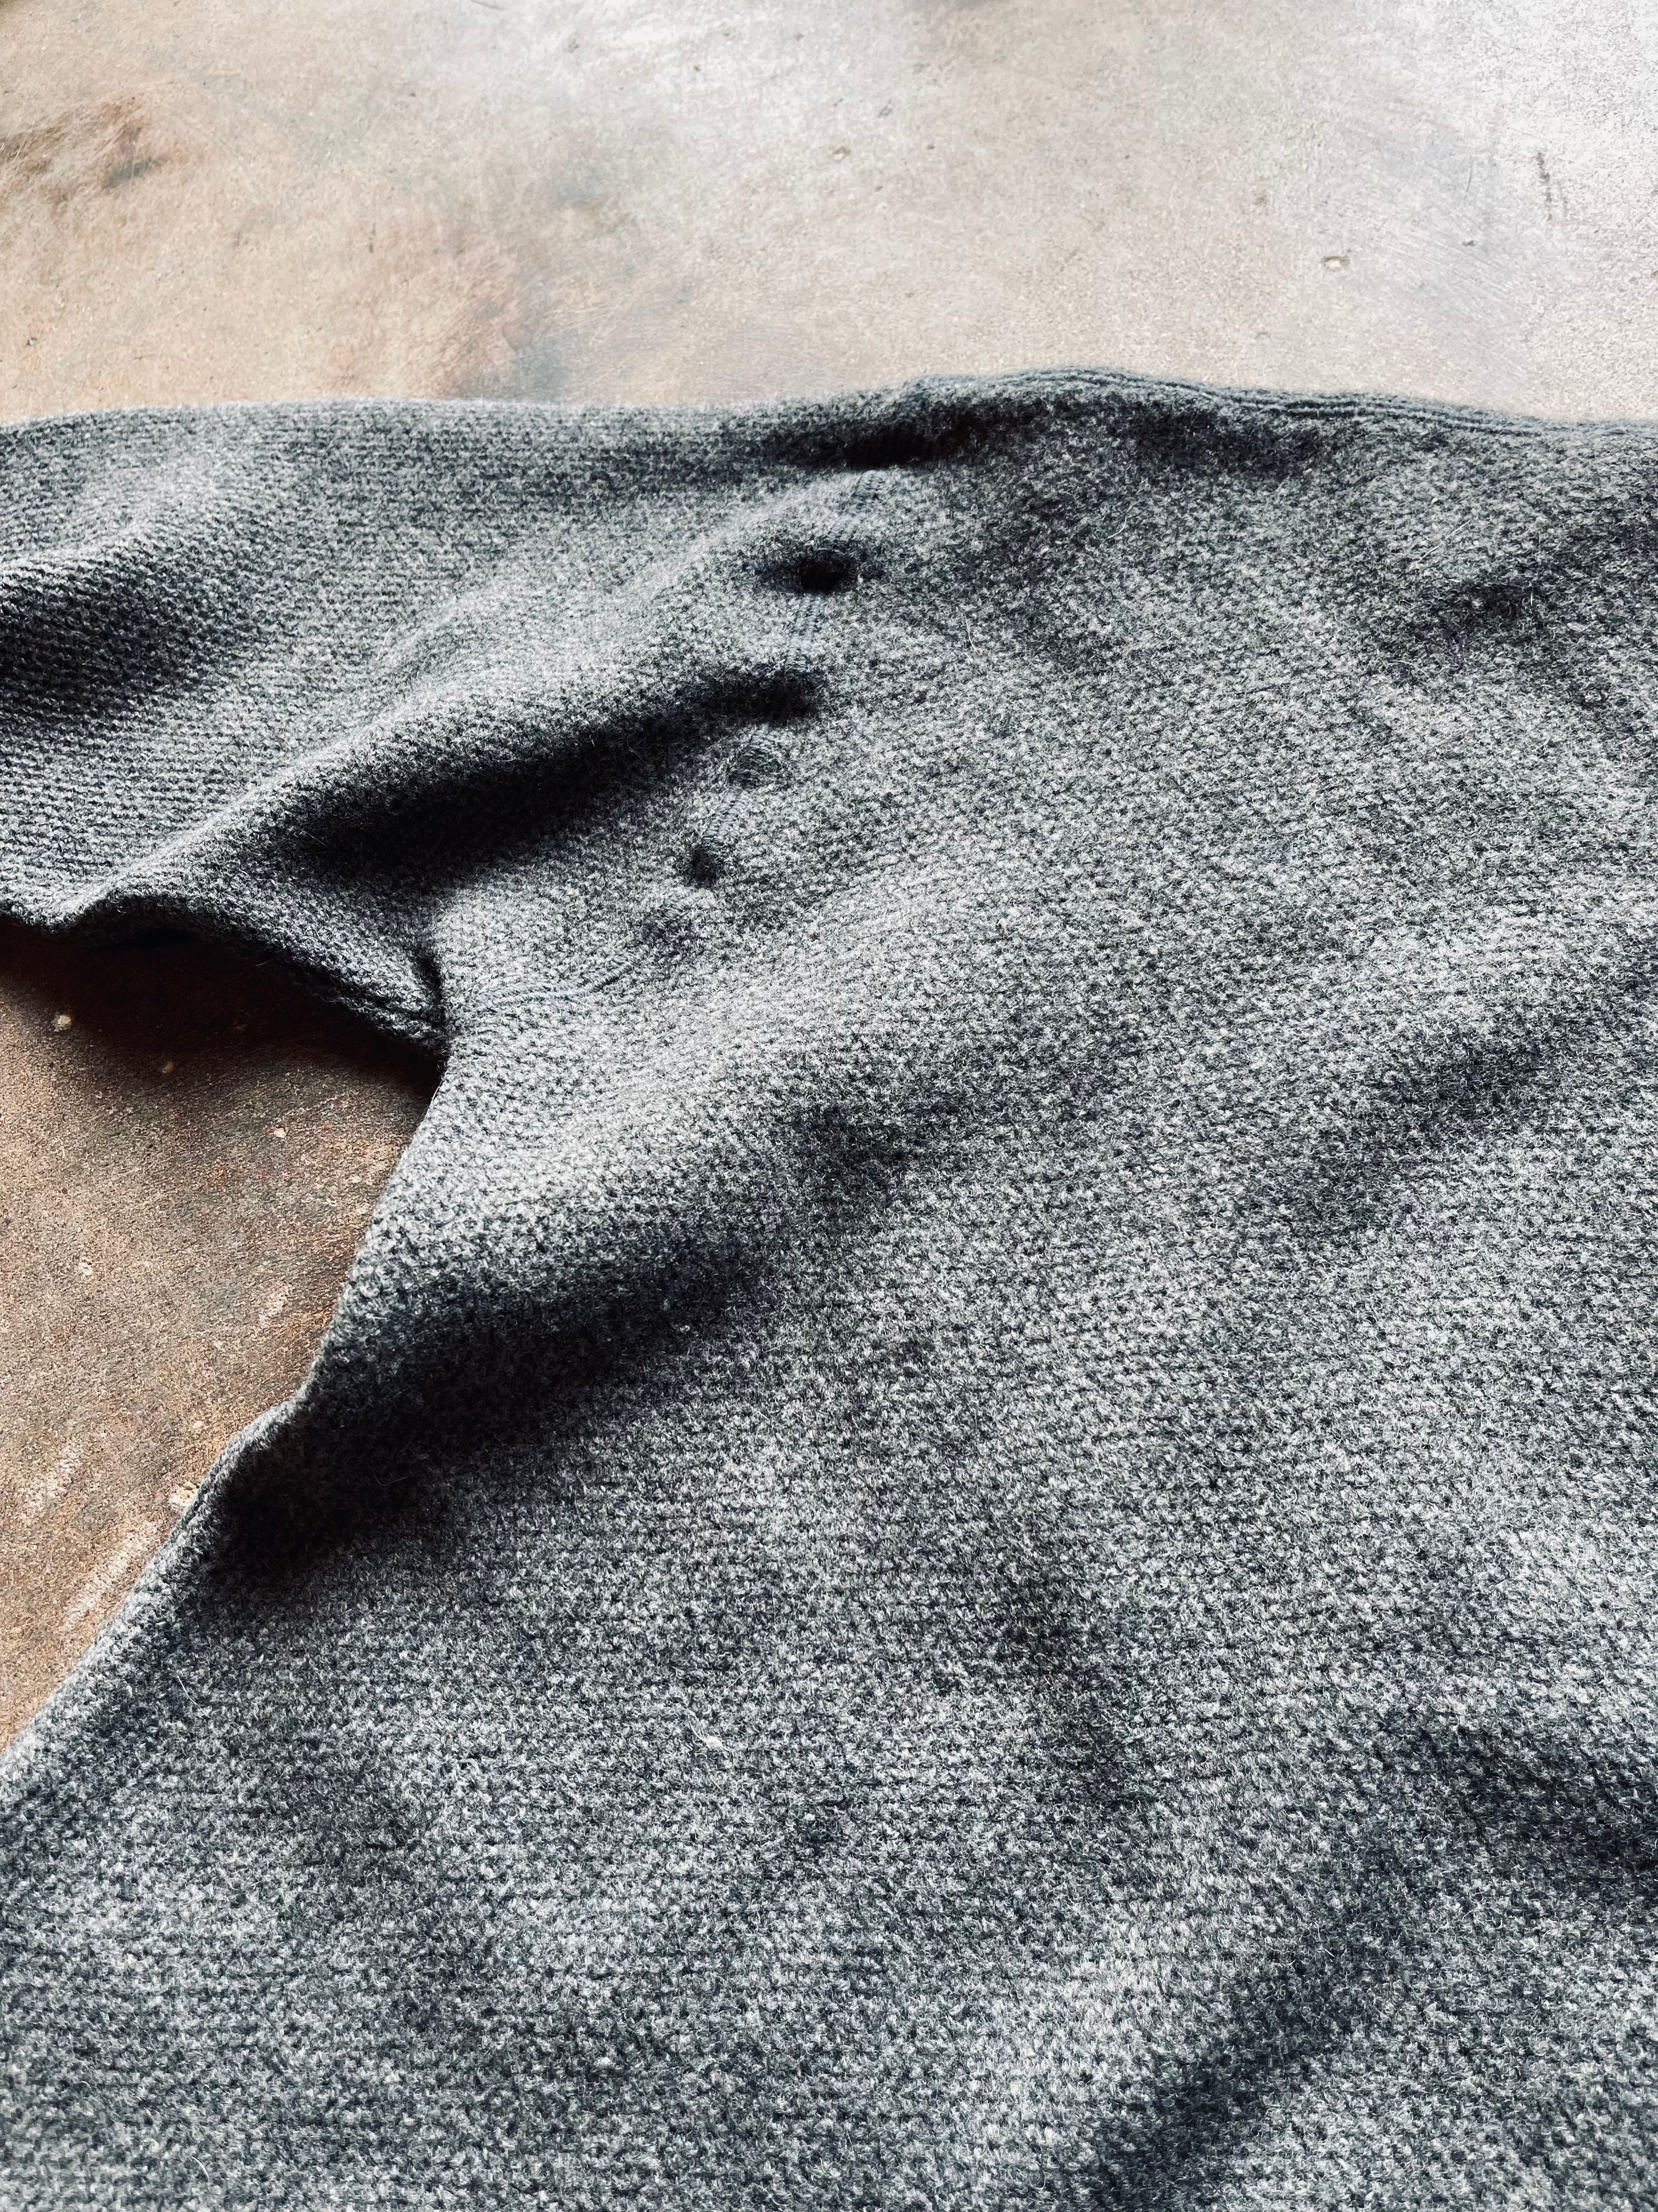 1990’s GAP Crewneck Sweater | X-Large